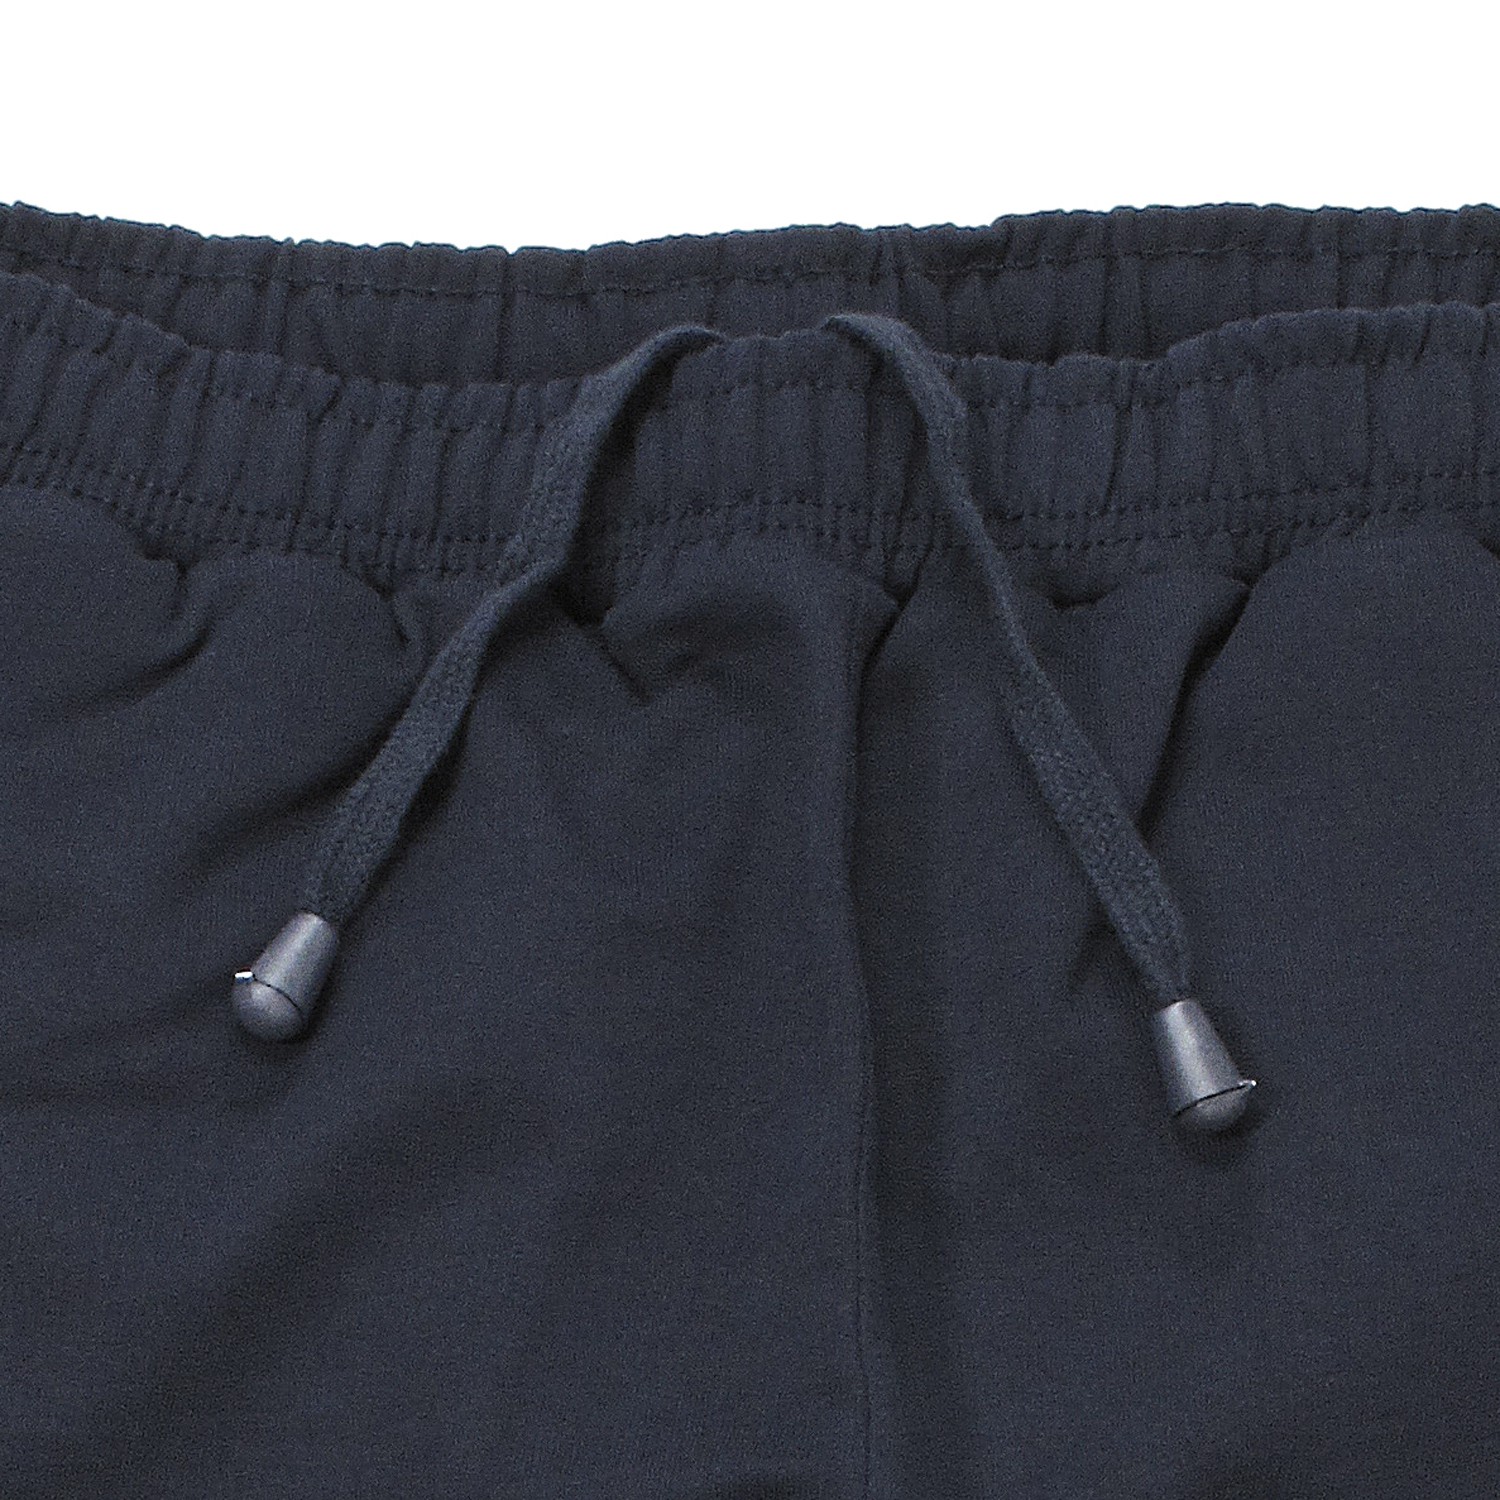 Basic sweat bermuda in dark blue by Ahorn Sportswear in oversizes up to 10XL